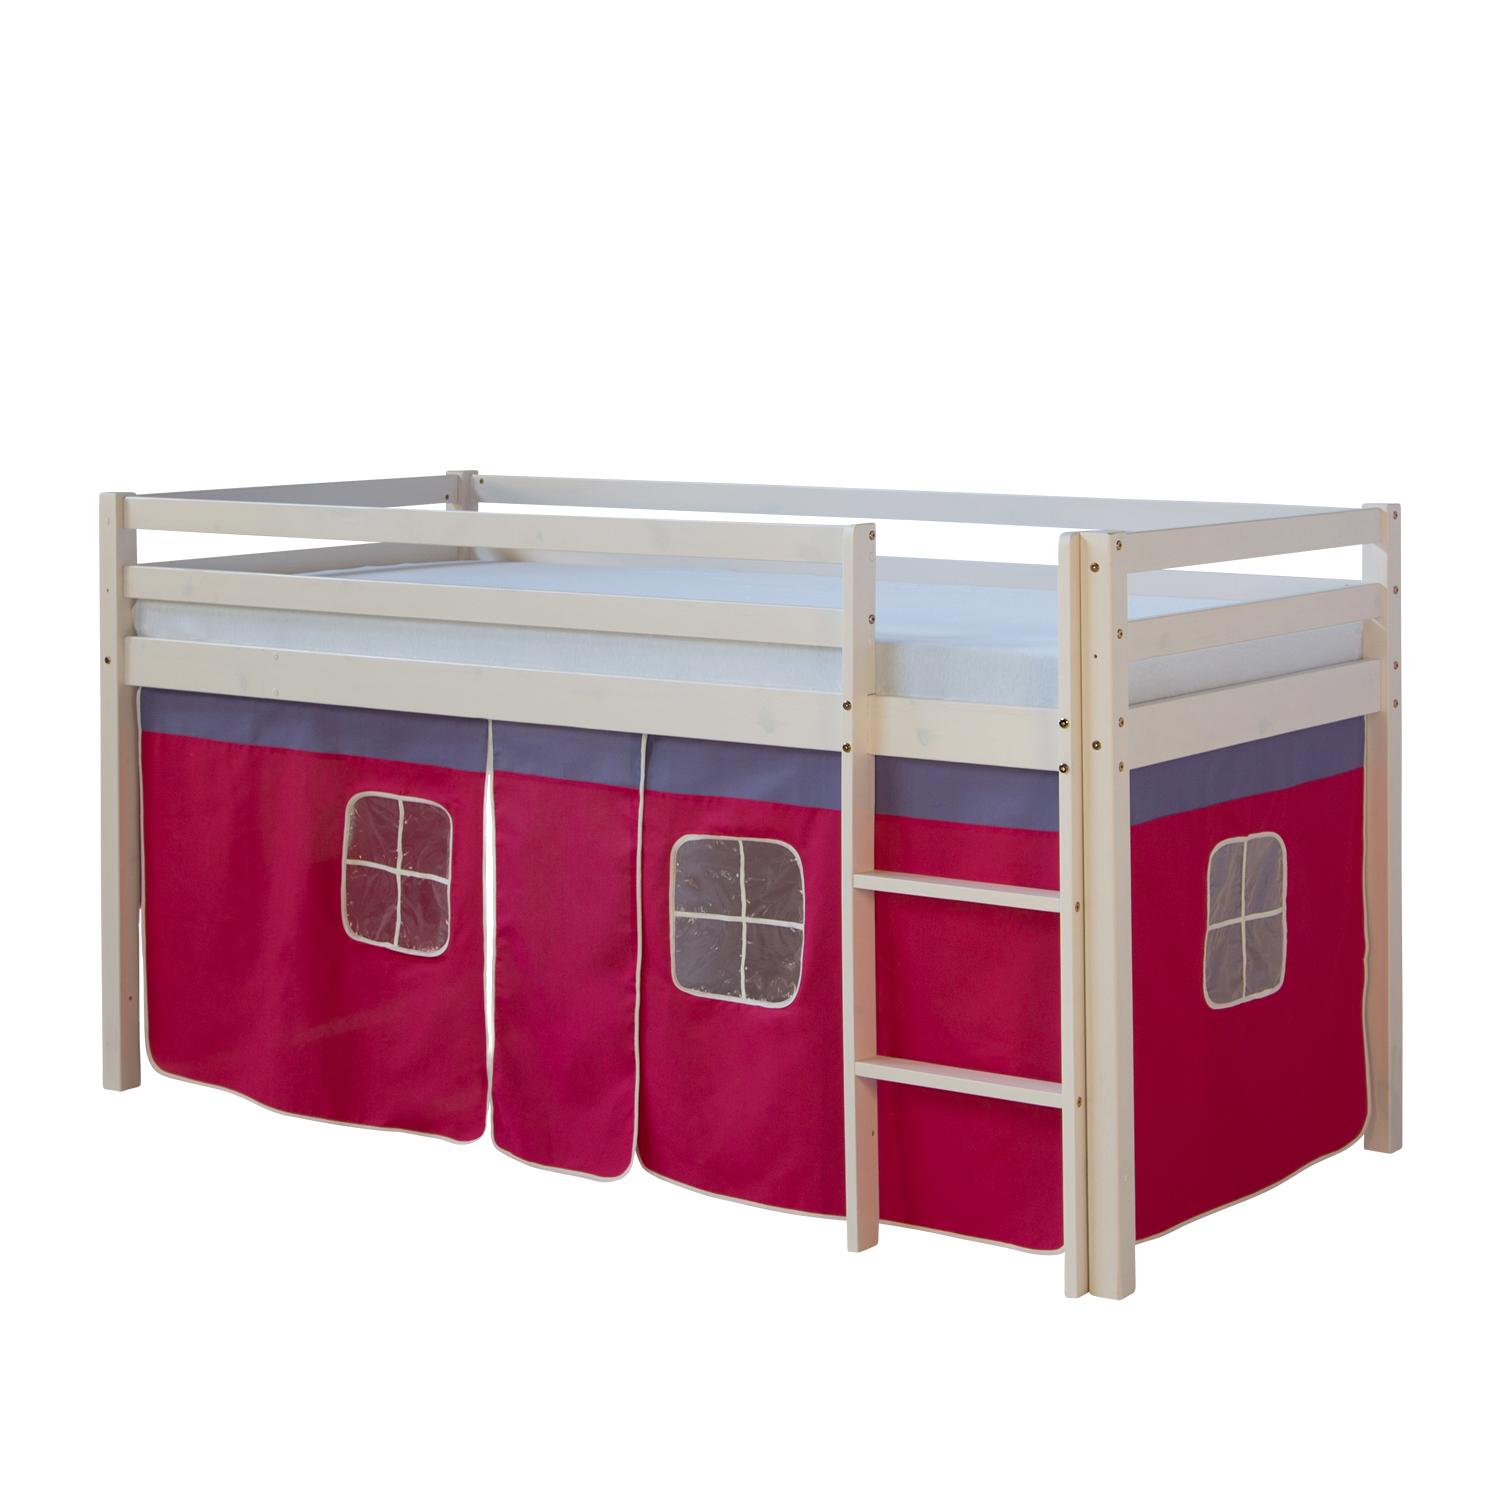 Children bunk bed loft cabin bed solid pine white pink curtain